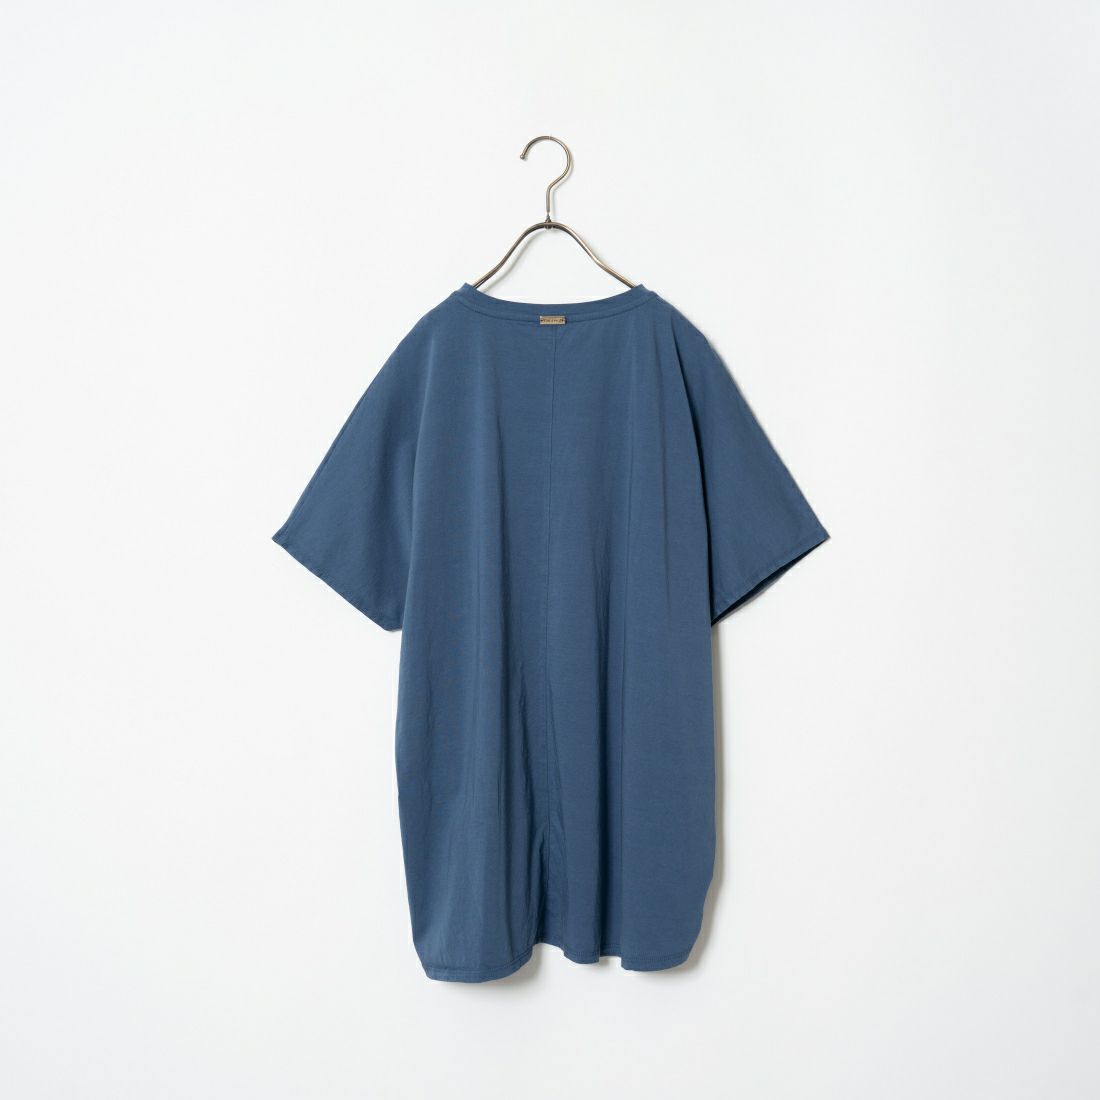 MICA&DEAL [マイカアンドディール] Raleigh ロゴTシャツ [0124209099] BLUE